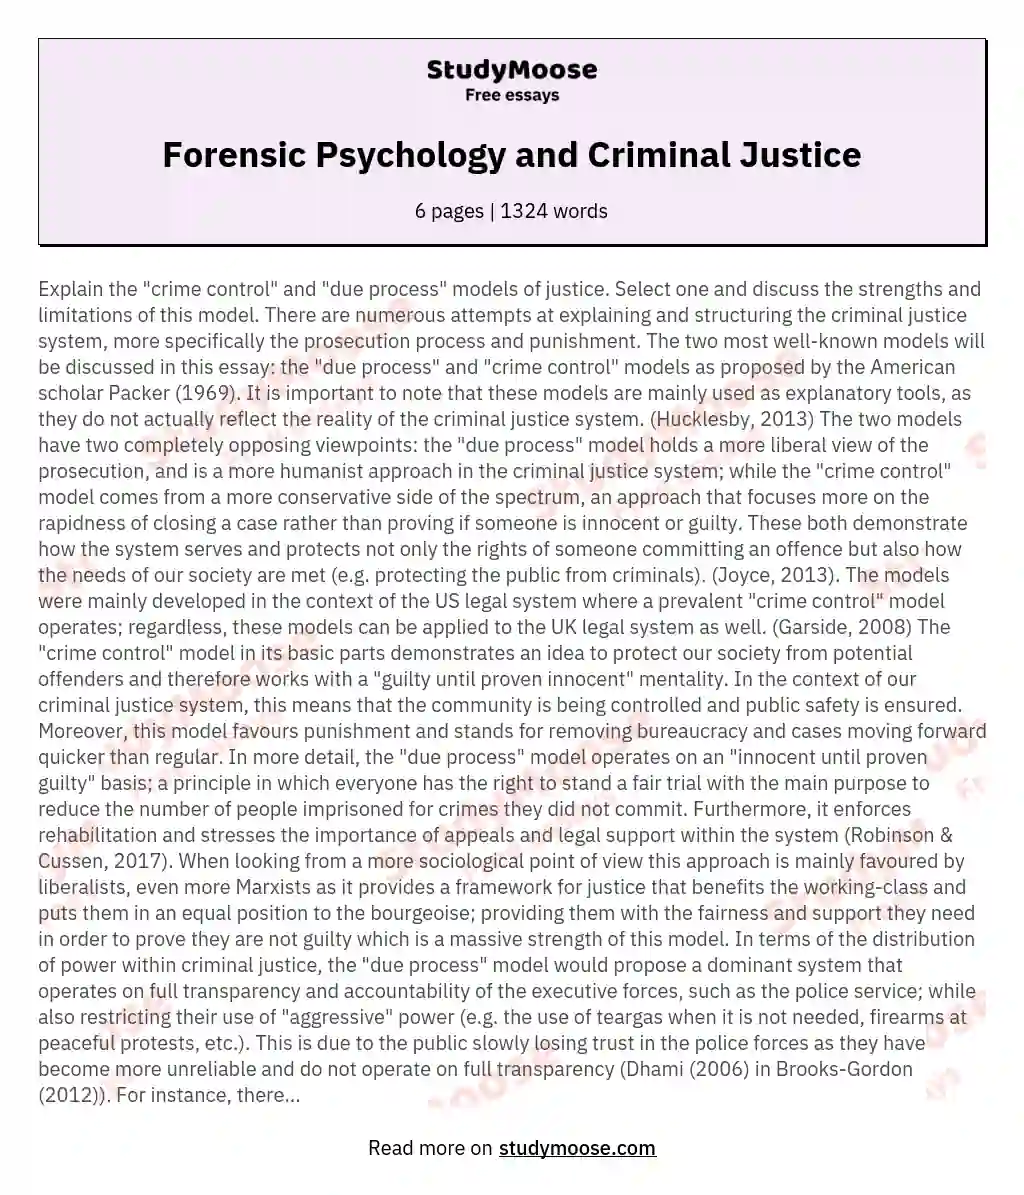 Forensic Psychology and Criminal Justice